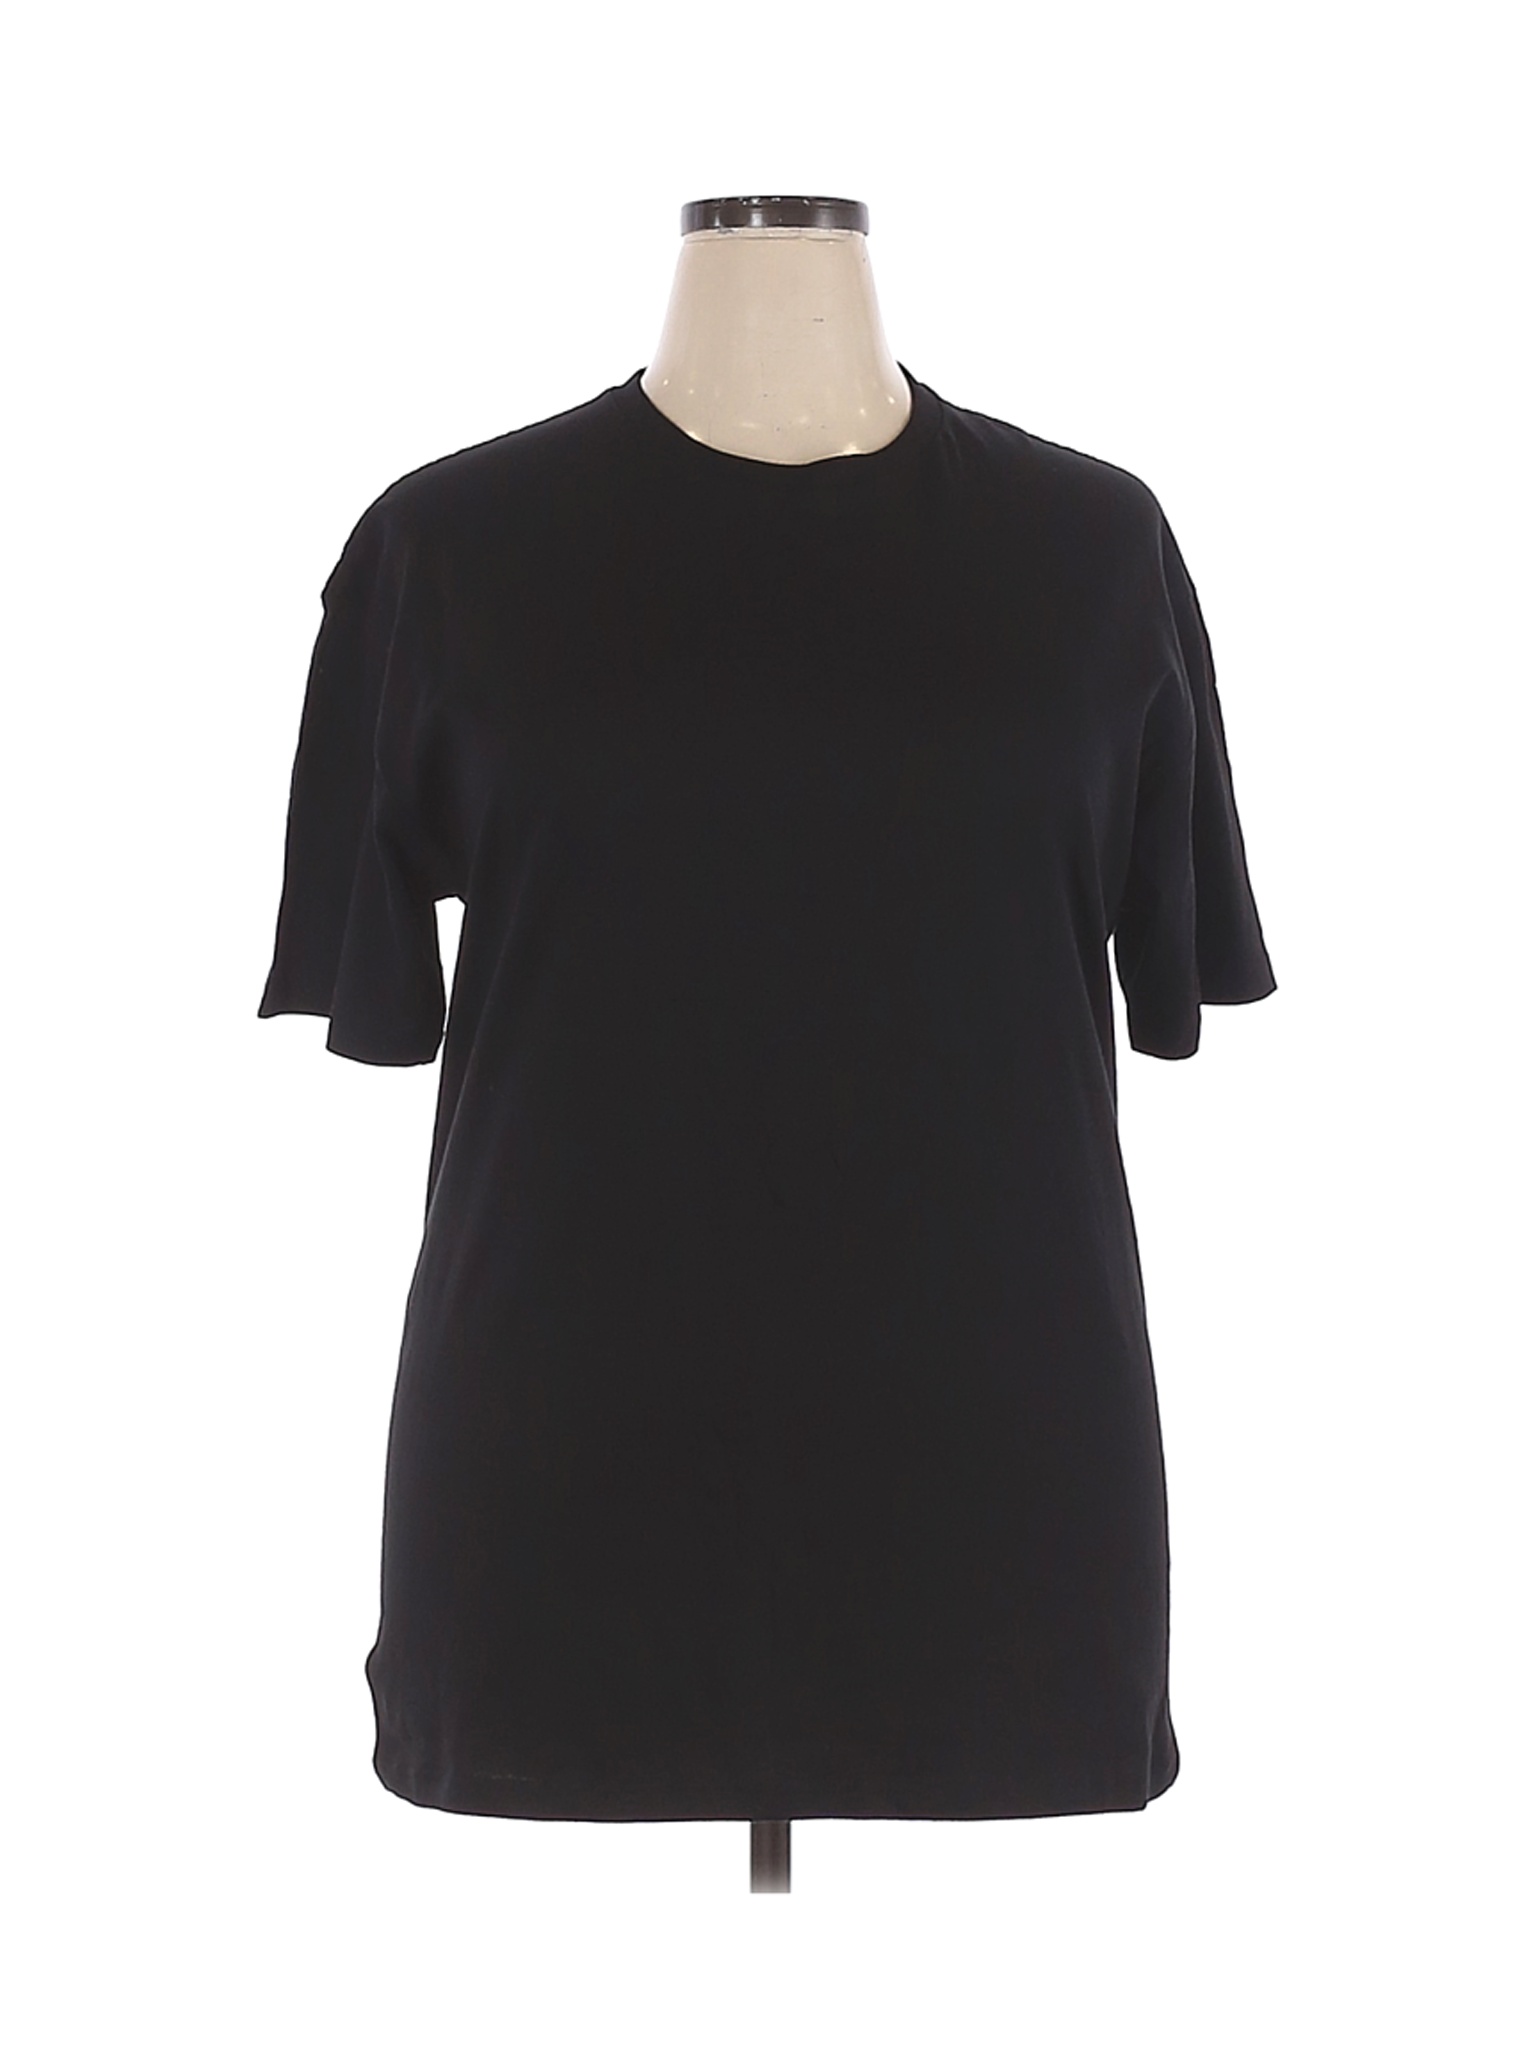 Cotton Heritage Women Black Short Sleeve T-Shirt XL | eBay